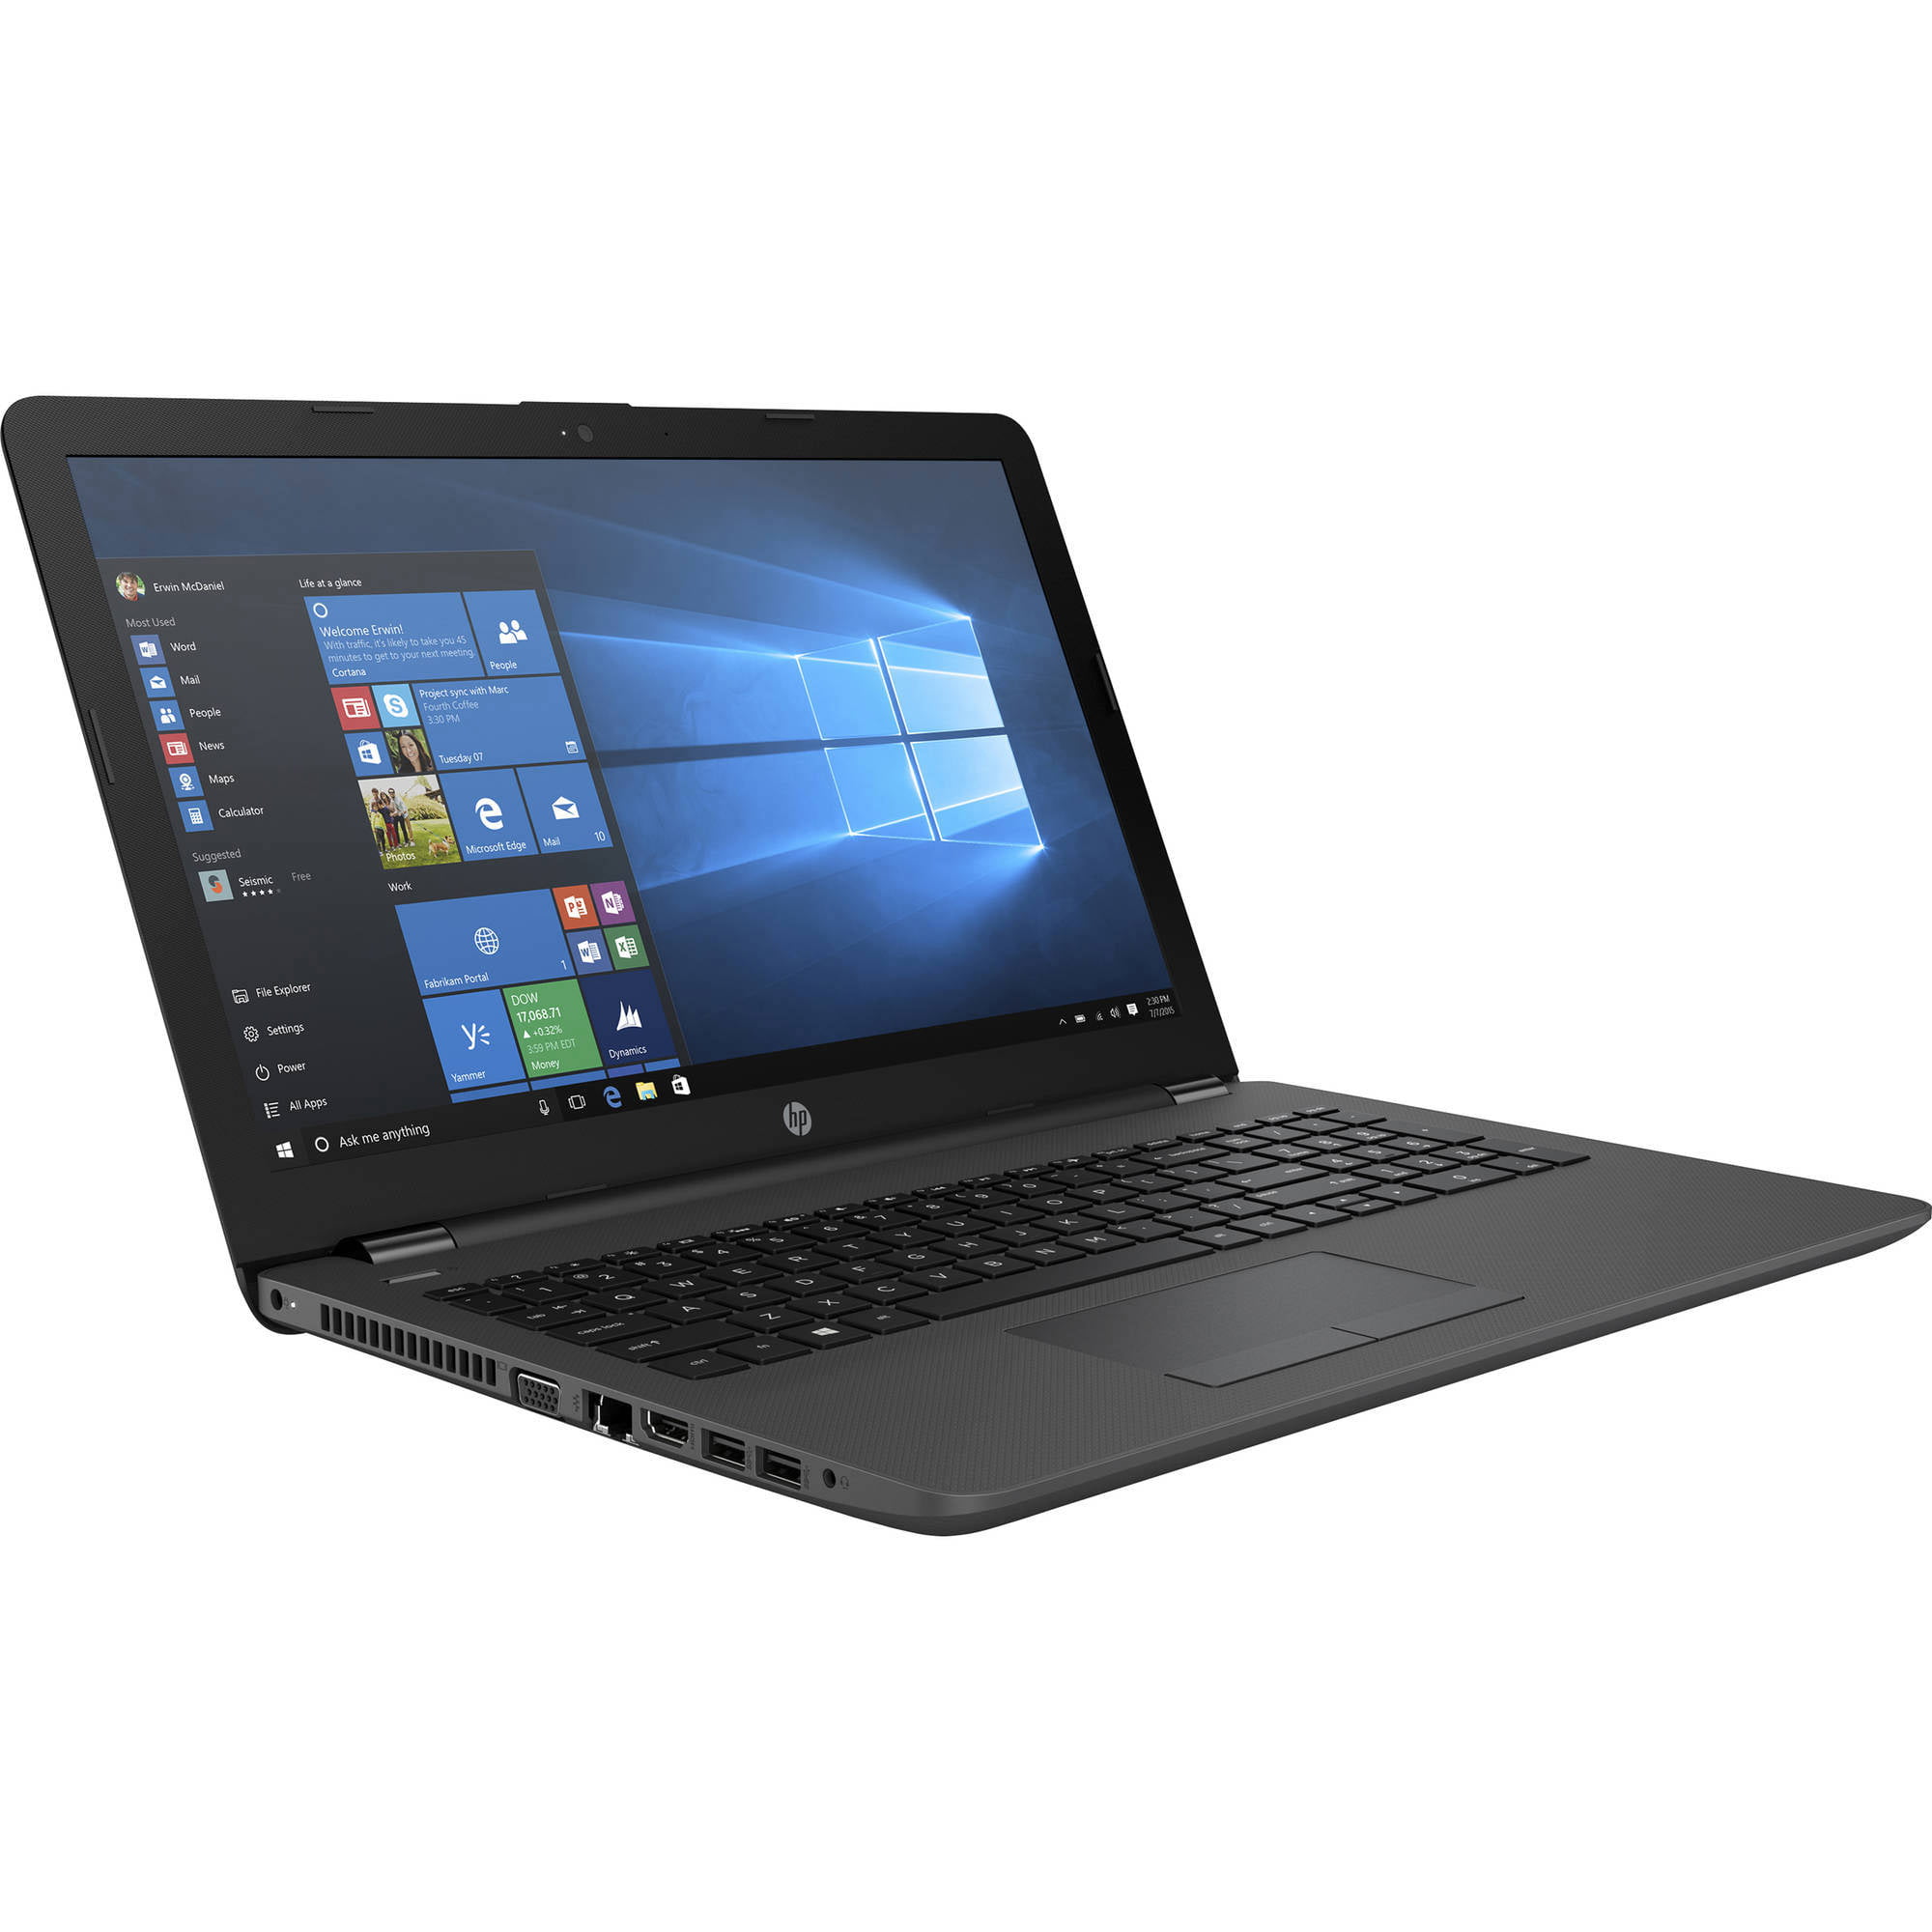 HP 250 G6 Notebook PC (ENERGY STAR)(1NW56UT) 15.6in 500GB/4GB/4GB 2.5GHz  Windows 10 Pro 64 Intel HD Graphics 620